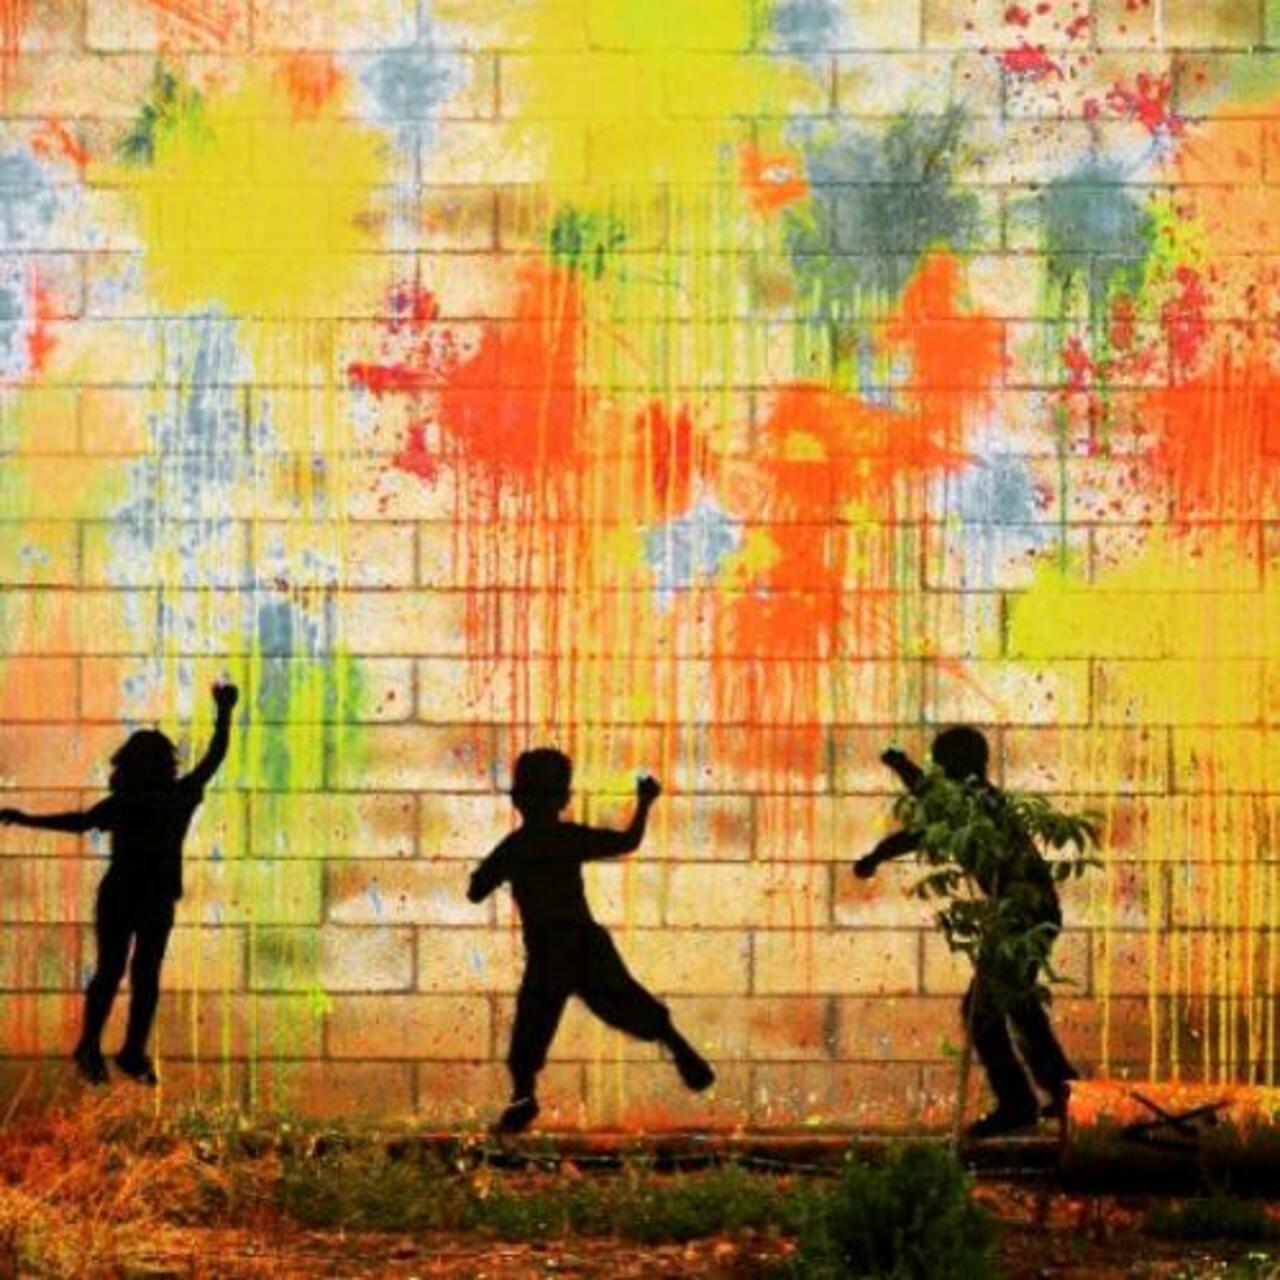 ##Streetart ##Sprayart ##Stencil ##Graffiti ... - #Mural - #ZangArt #Showcase - http://bit.ly/1DL44VB http://t.co/UoW7e25wey